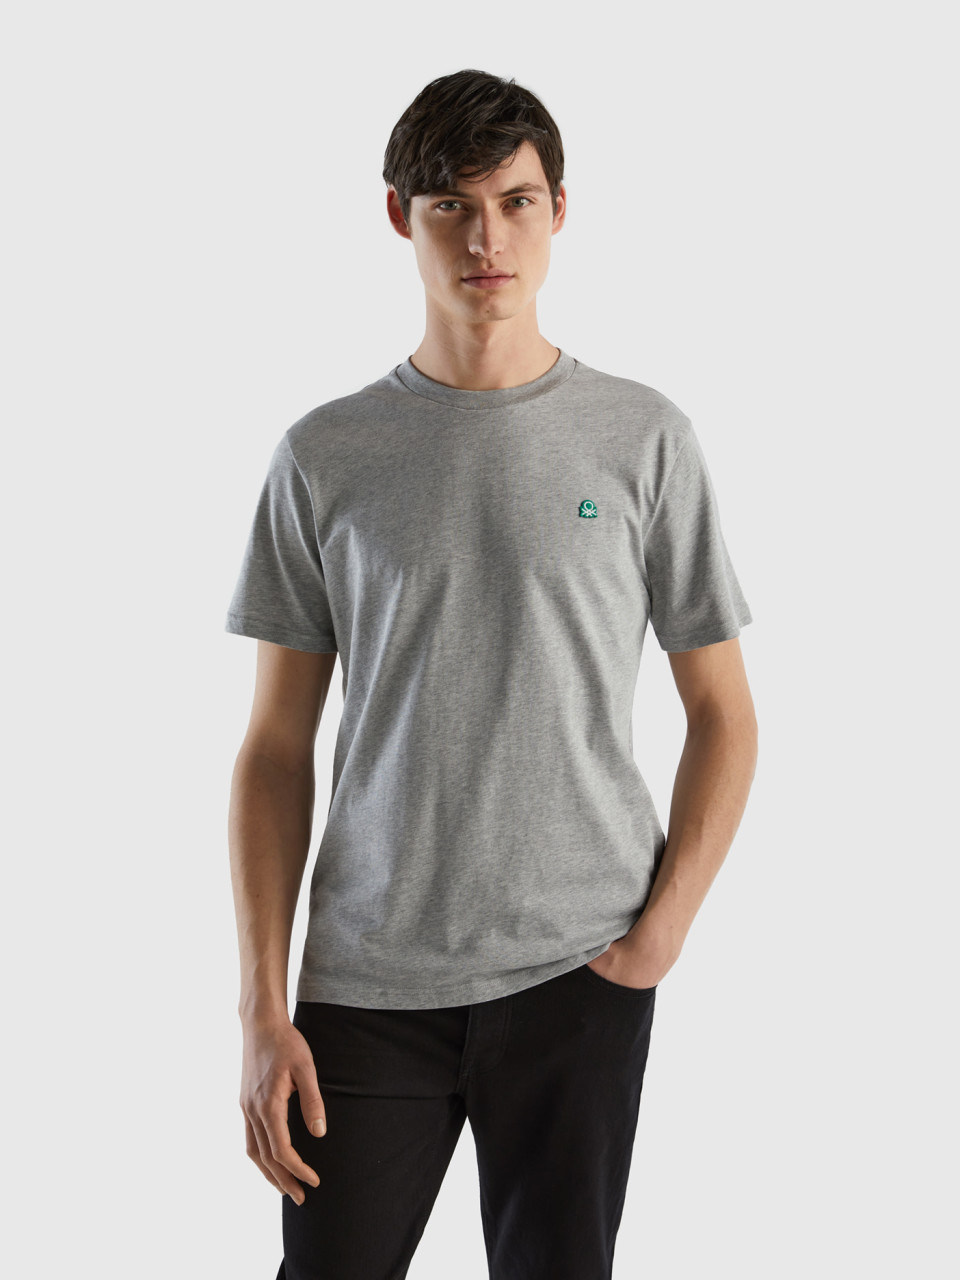 Benetton, 100% Organic Cotton Basic T-shirt, Light Gray, Men